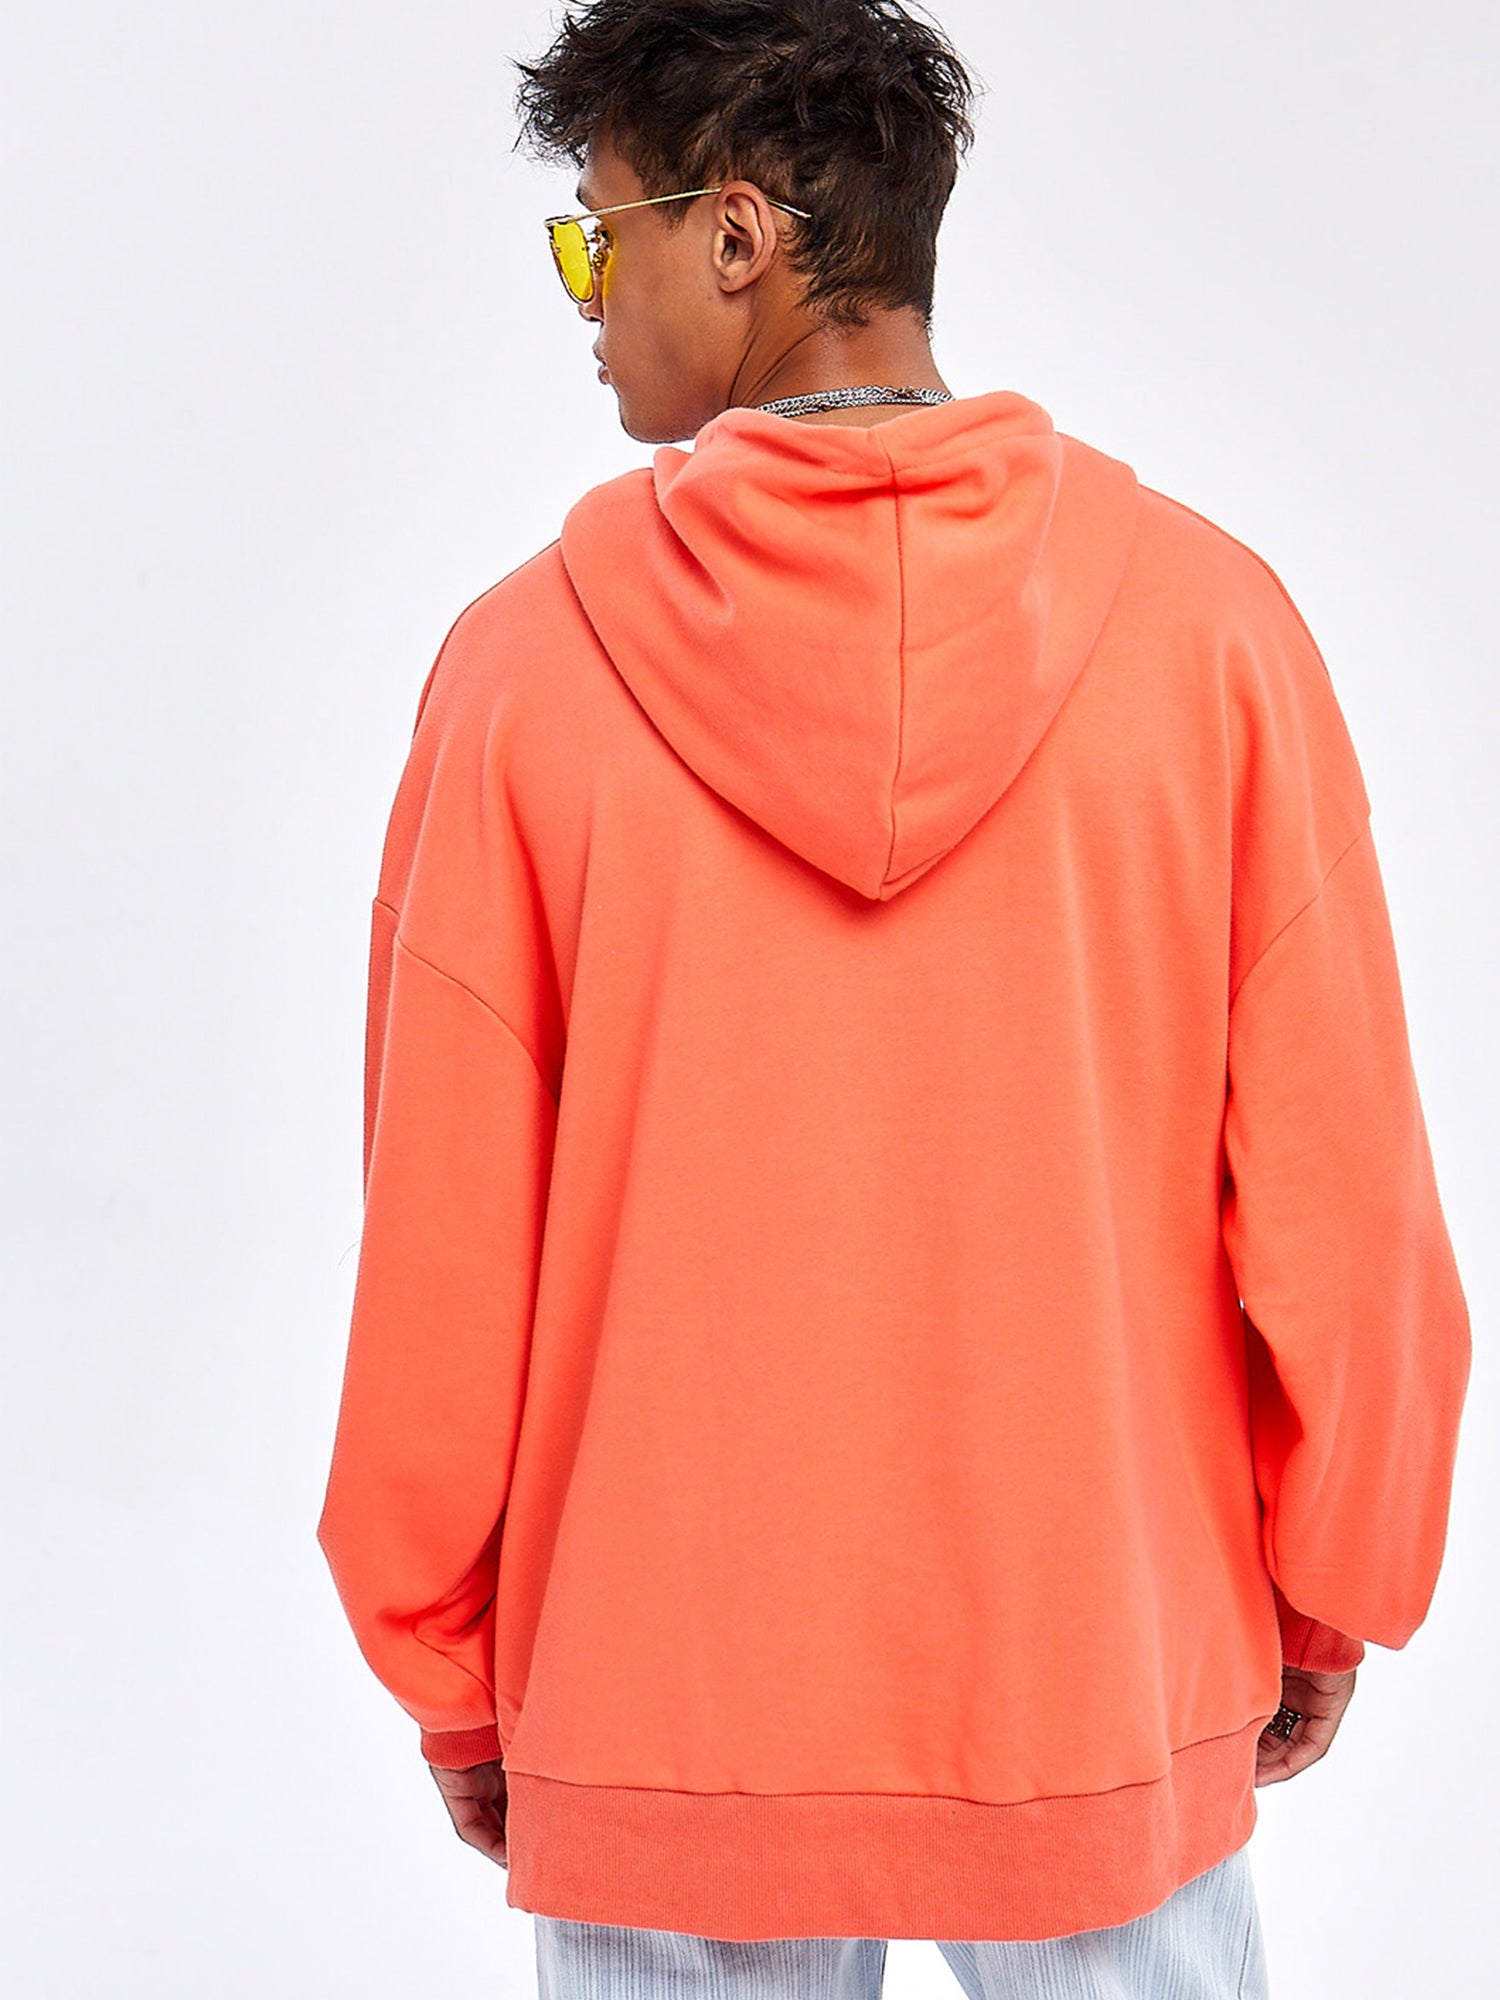 Full Sleeve Cartoon Cotton Orange Hoodie